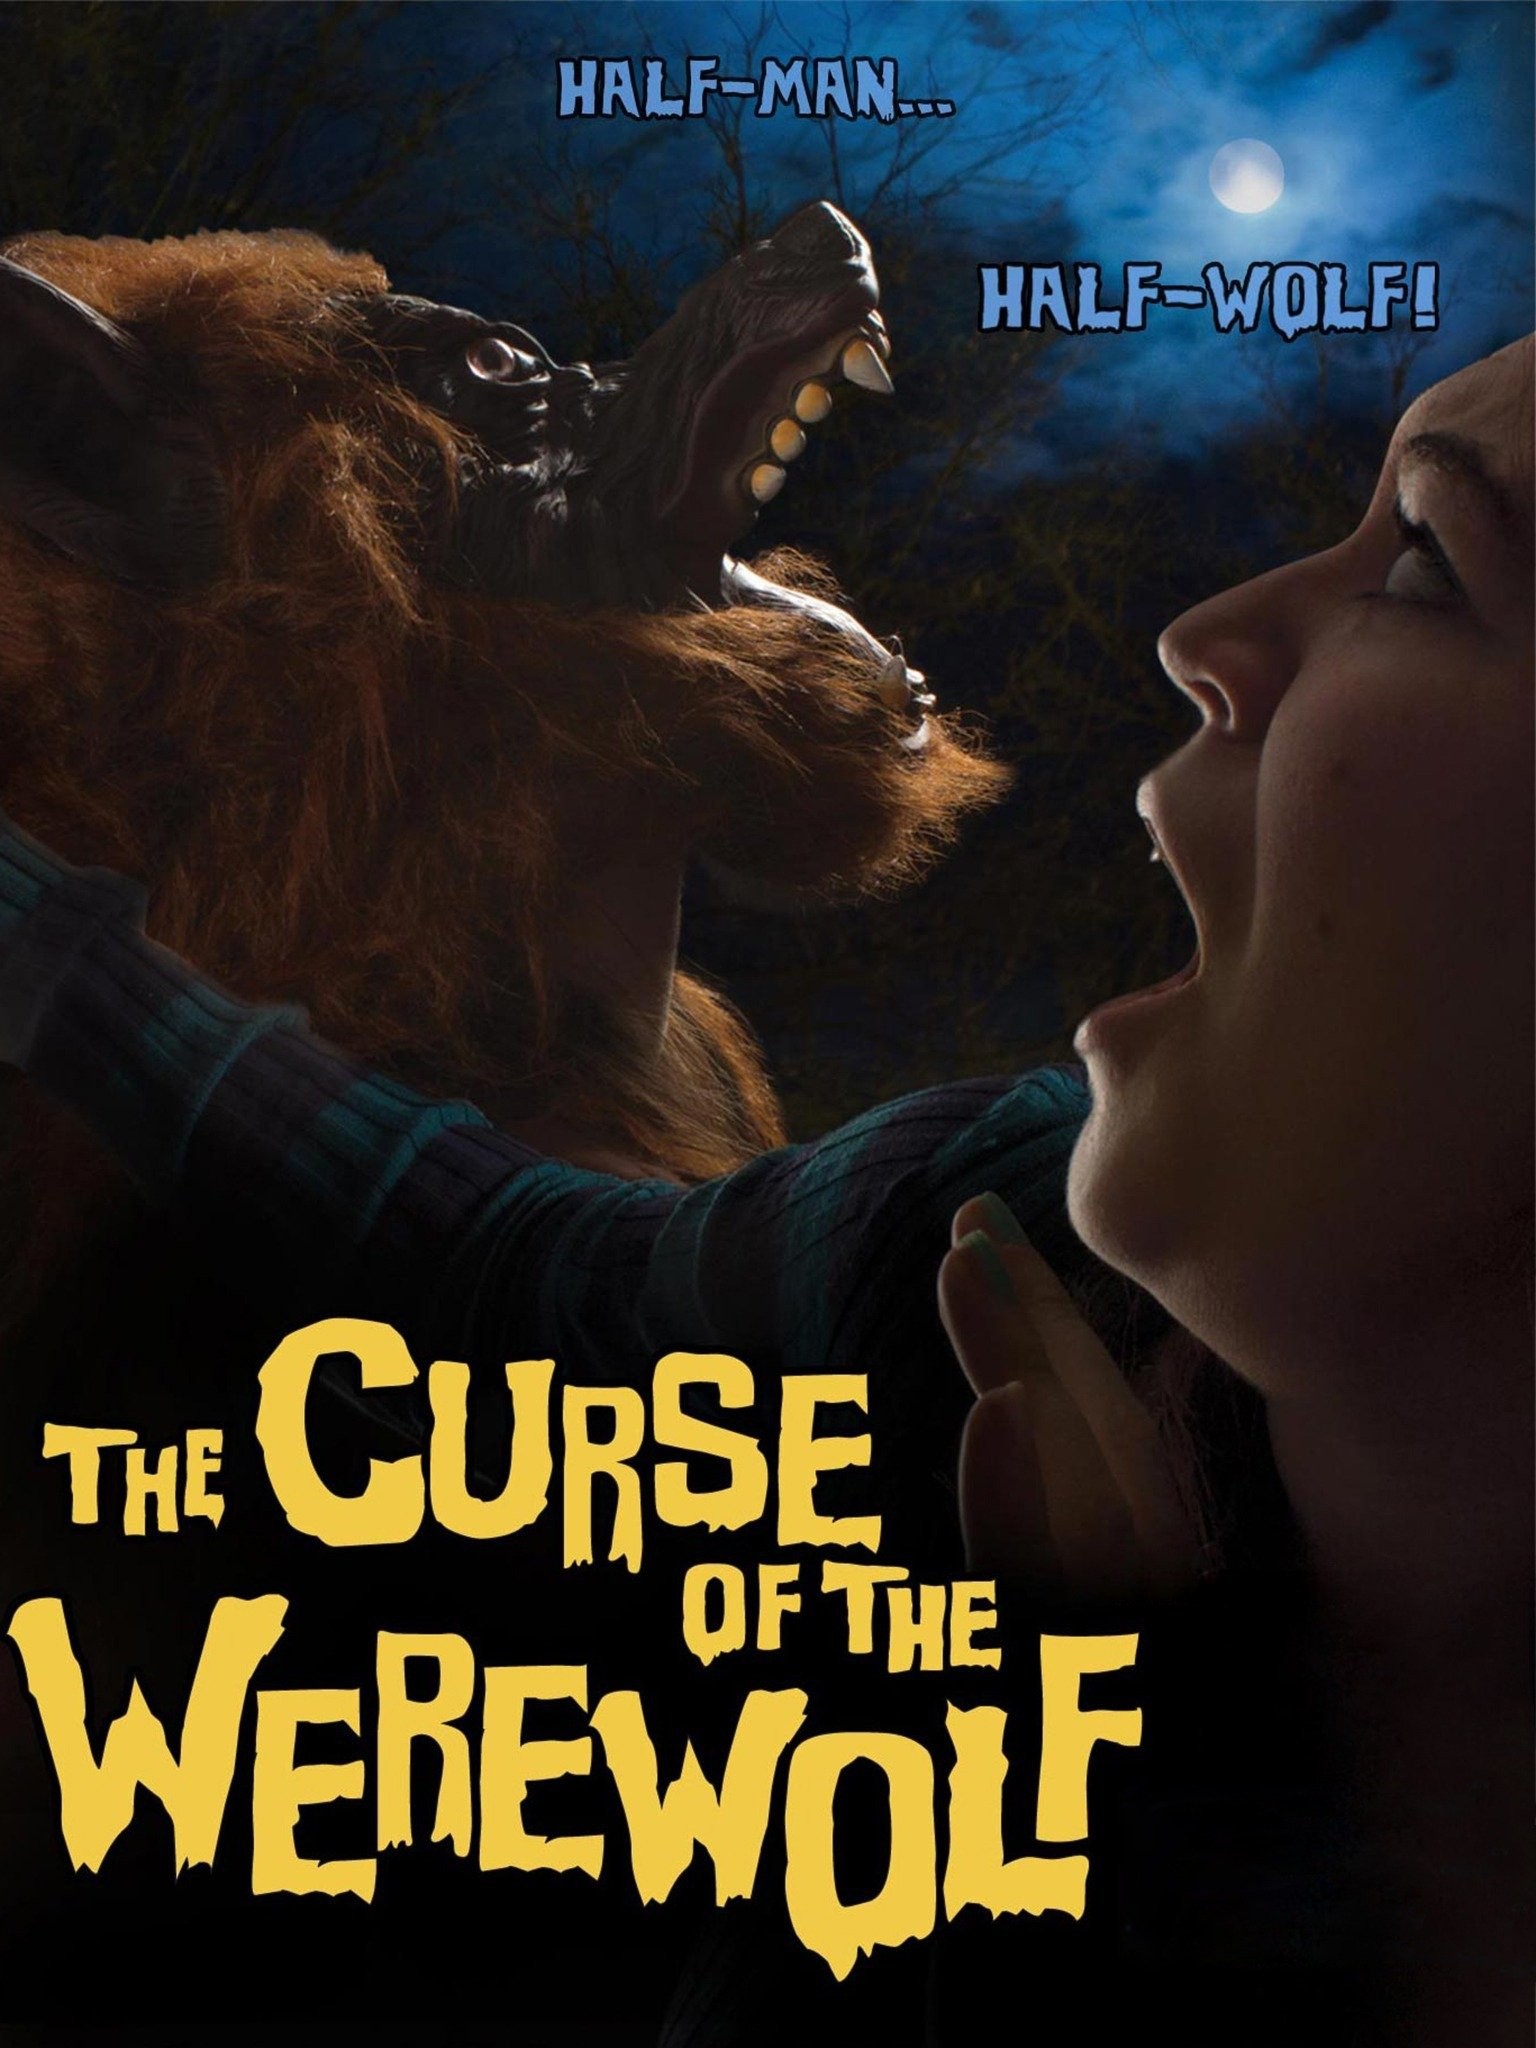 Nights of the Werewolf • Film + cast • Letterboxd